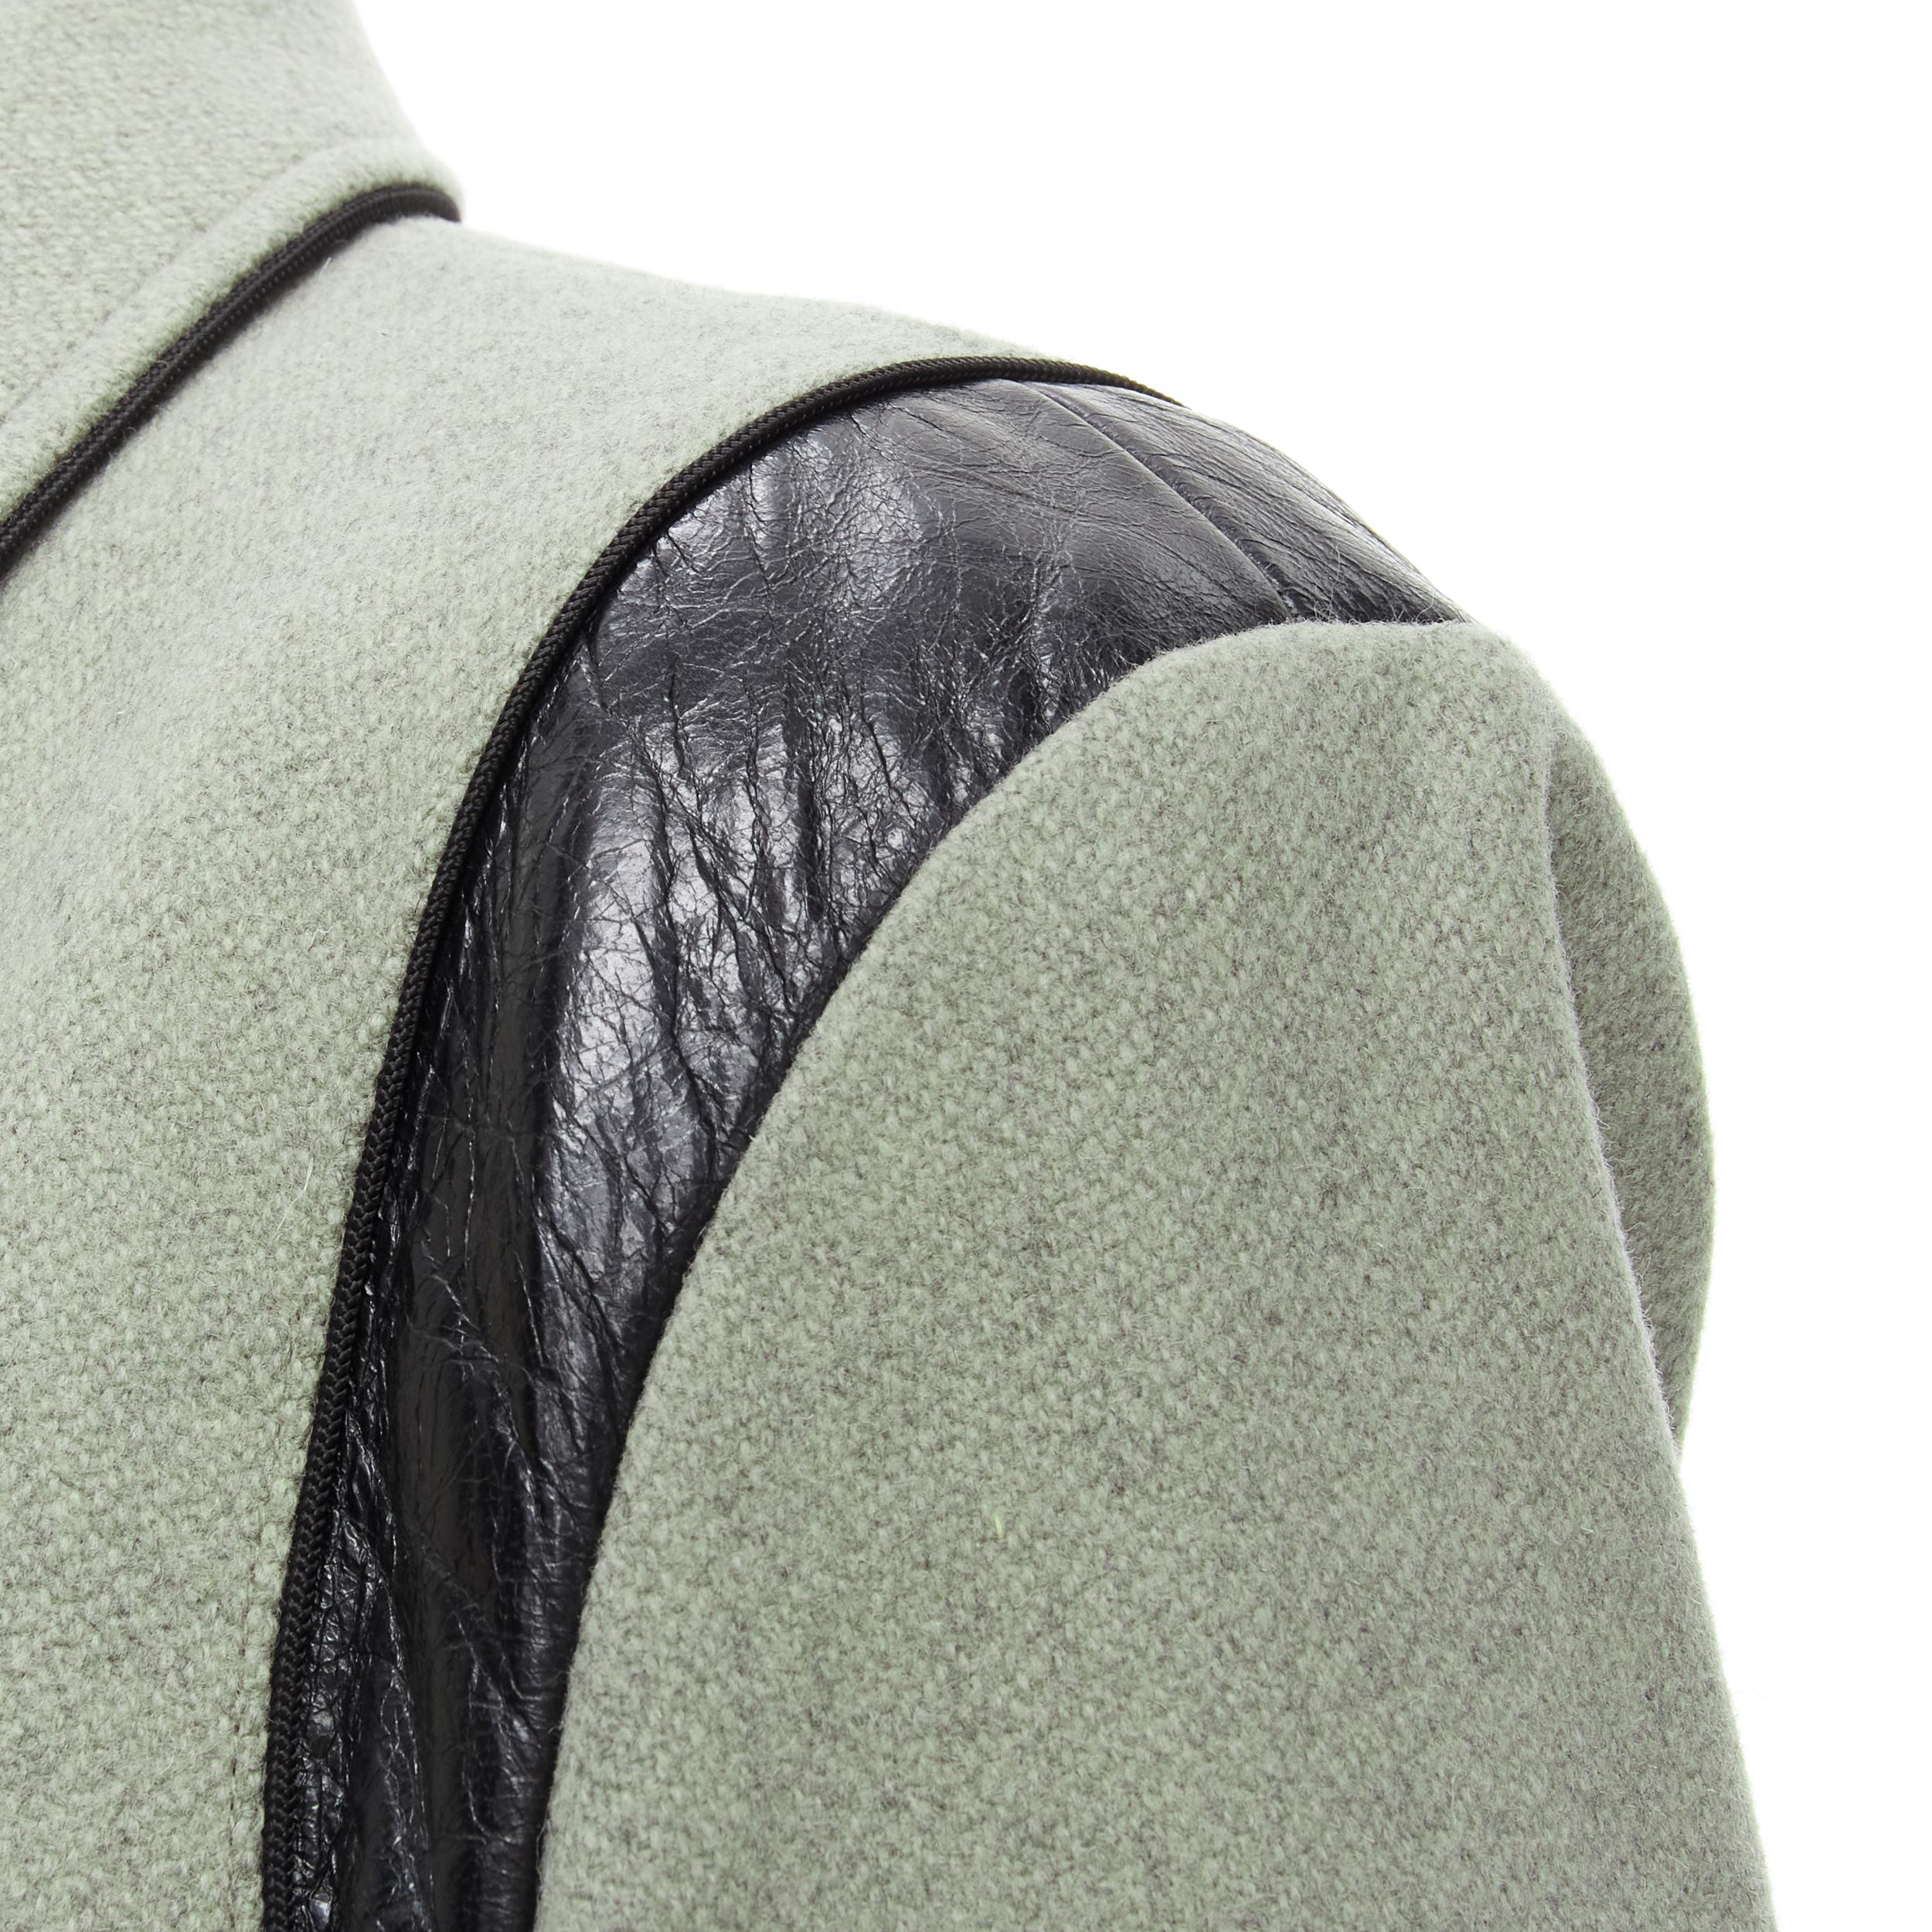 Celine Designer Monogram Faux Rabbit Fur Fabric RWMR993 for Winter Coats,  Jackets, Hoodies, Dolls